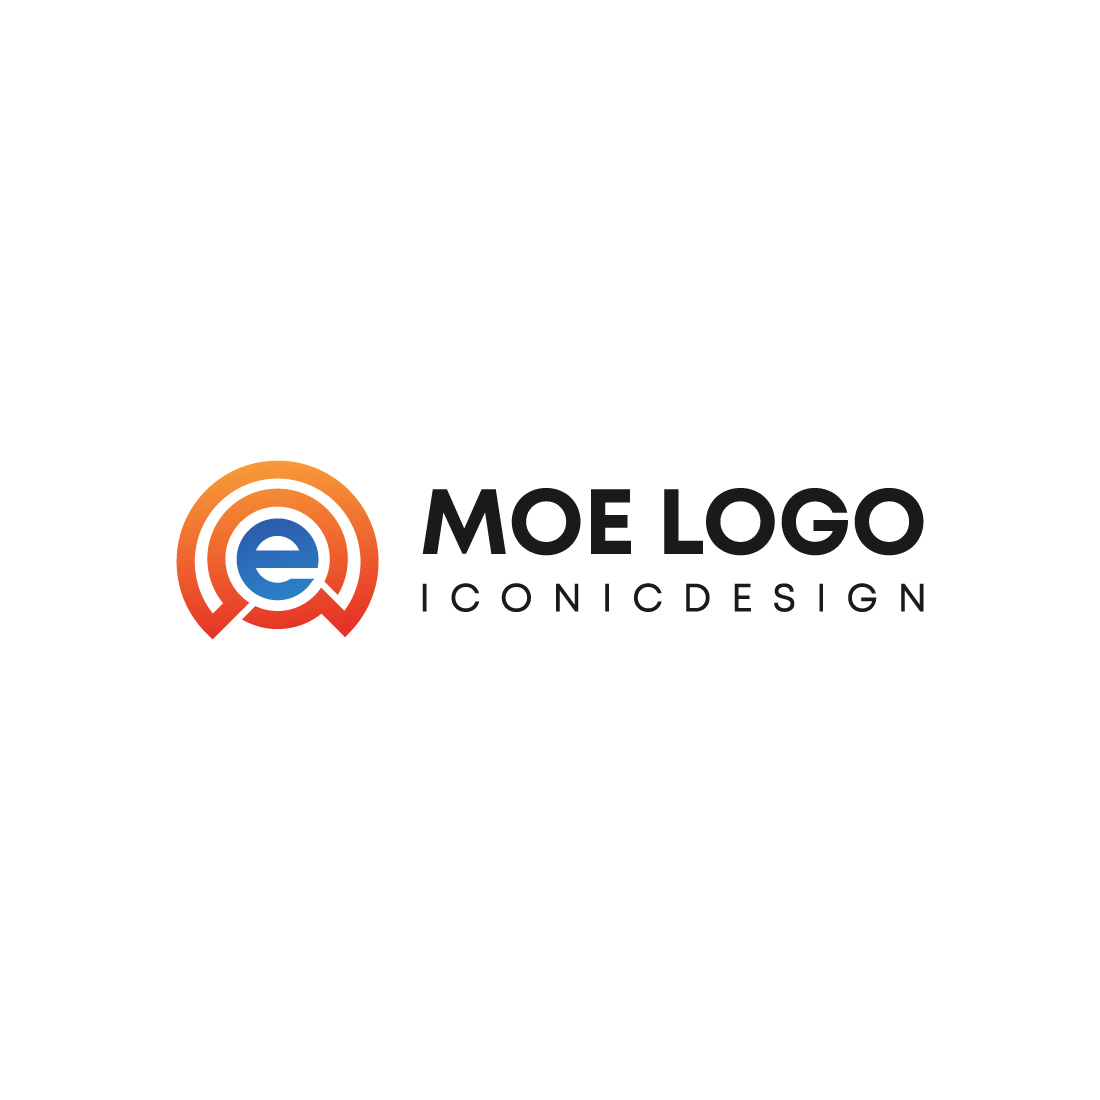 MOE logo preview image.